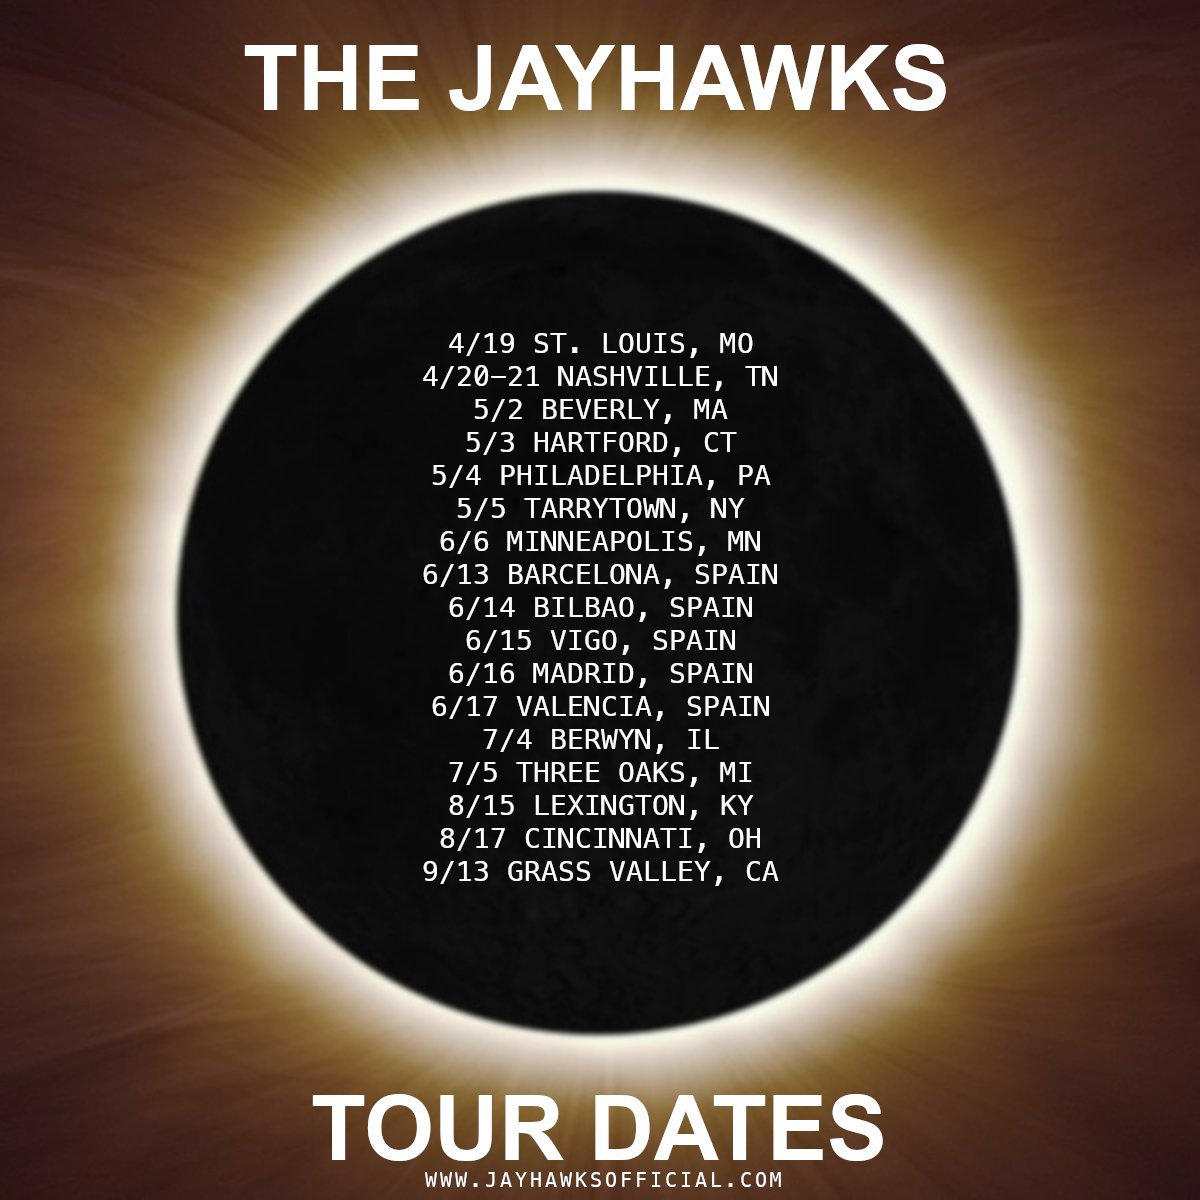 Latest tour news: tumblr.com/jayhawksoffici… Jayhawks tour dates: Jayhawks tour dates: bit.ly/JayhawksShows